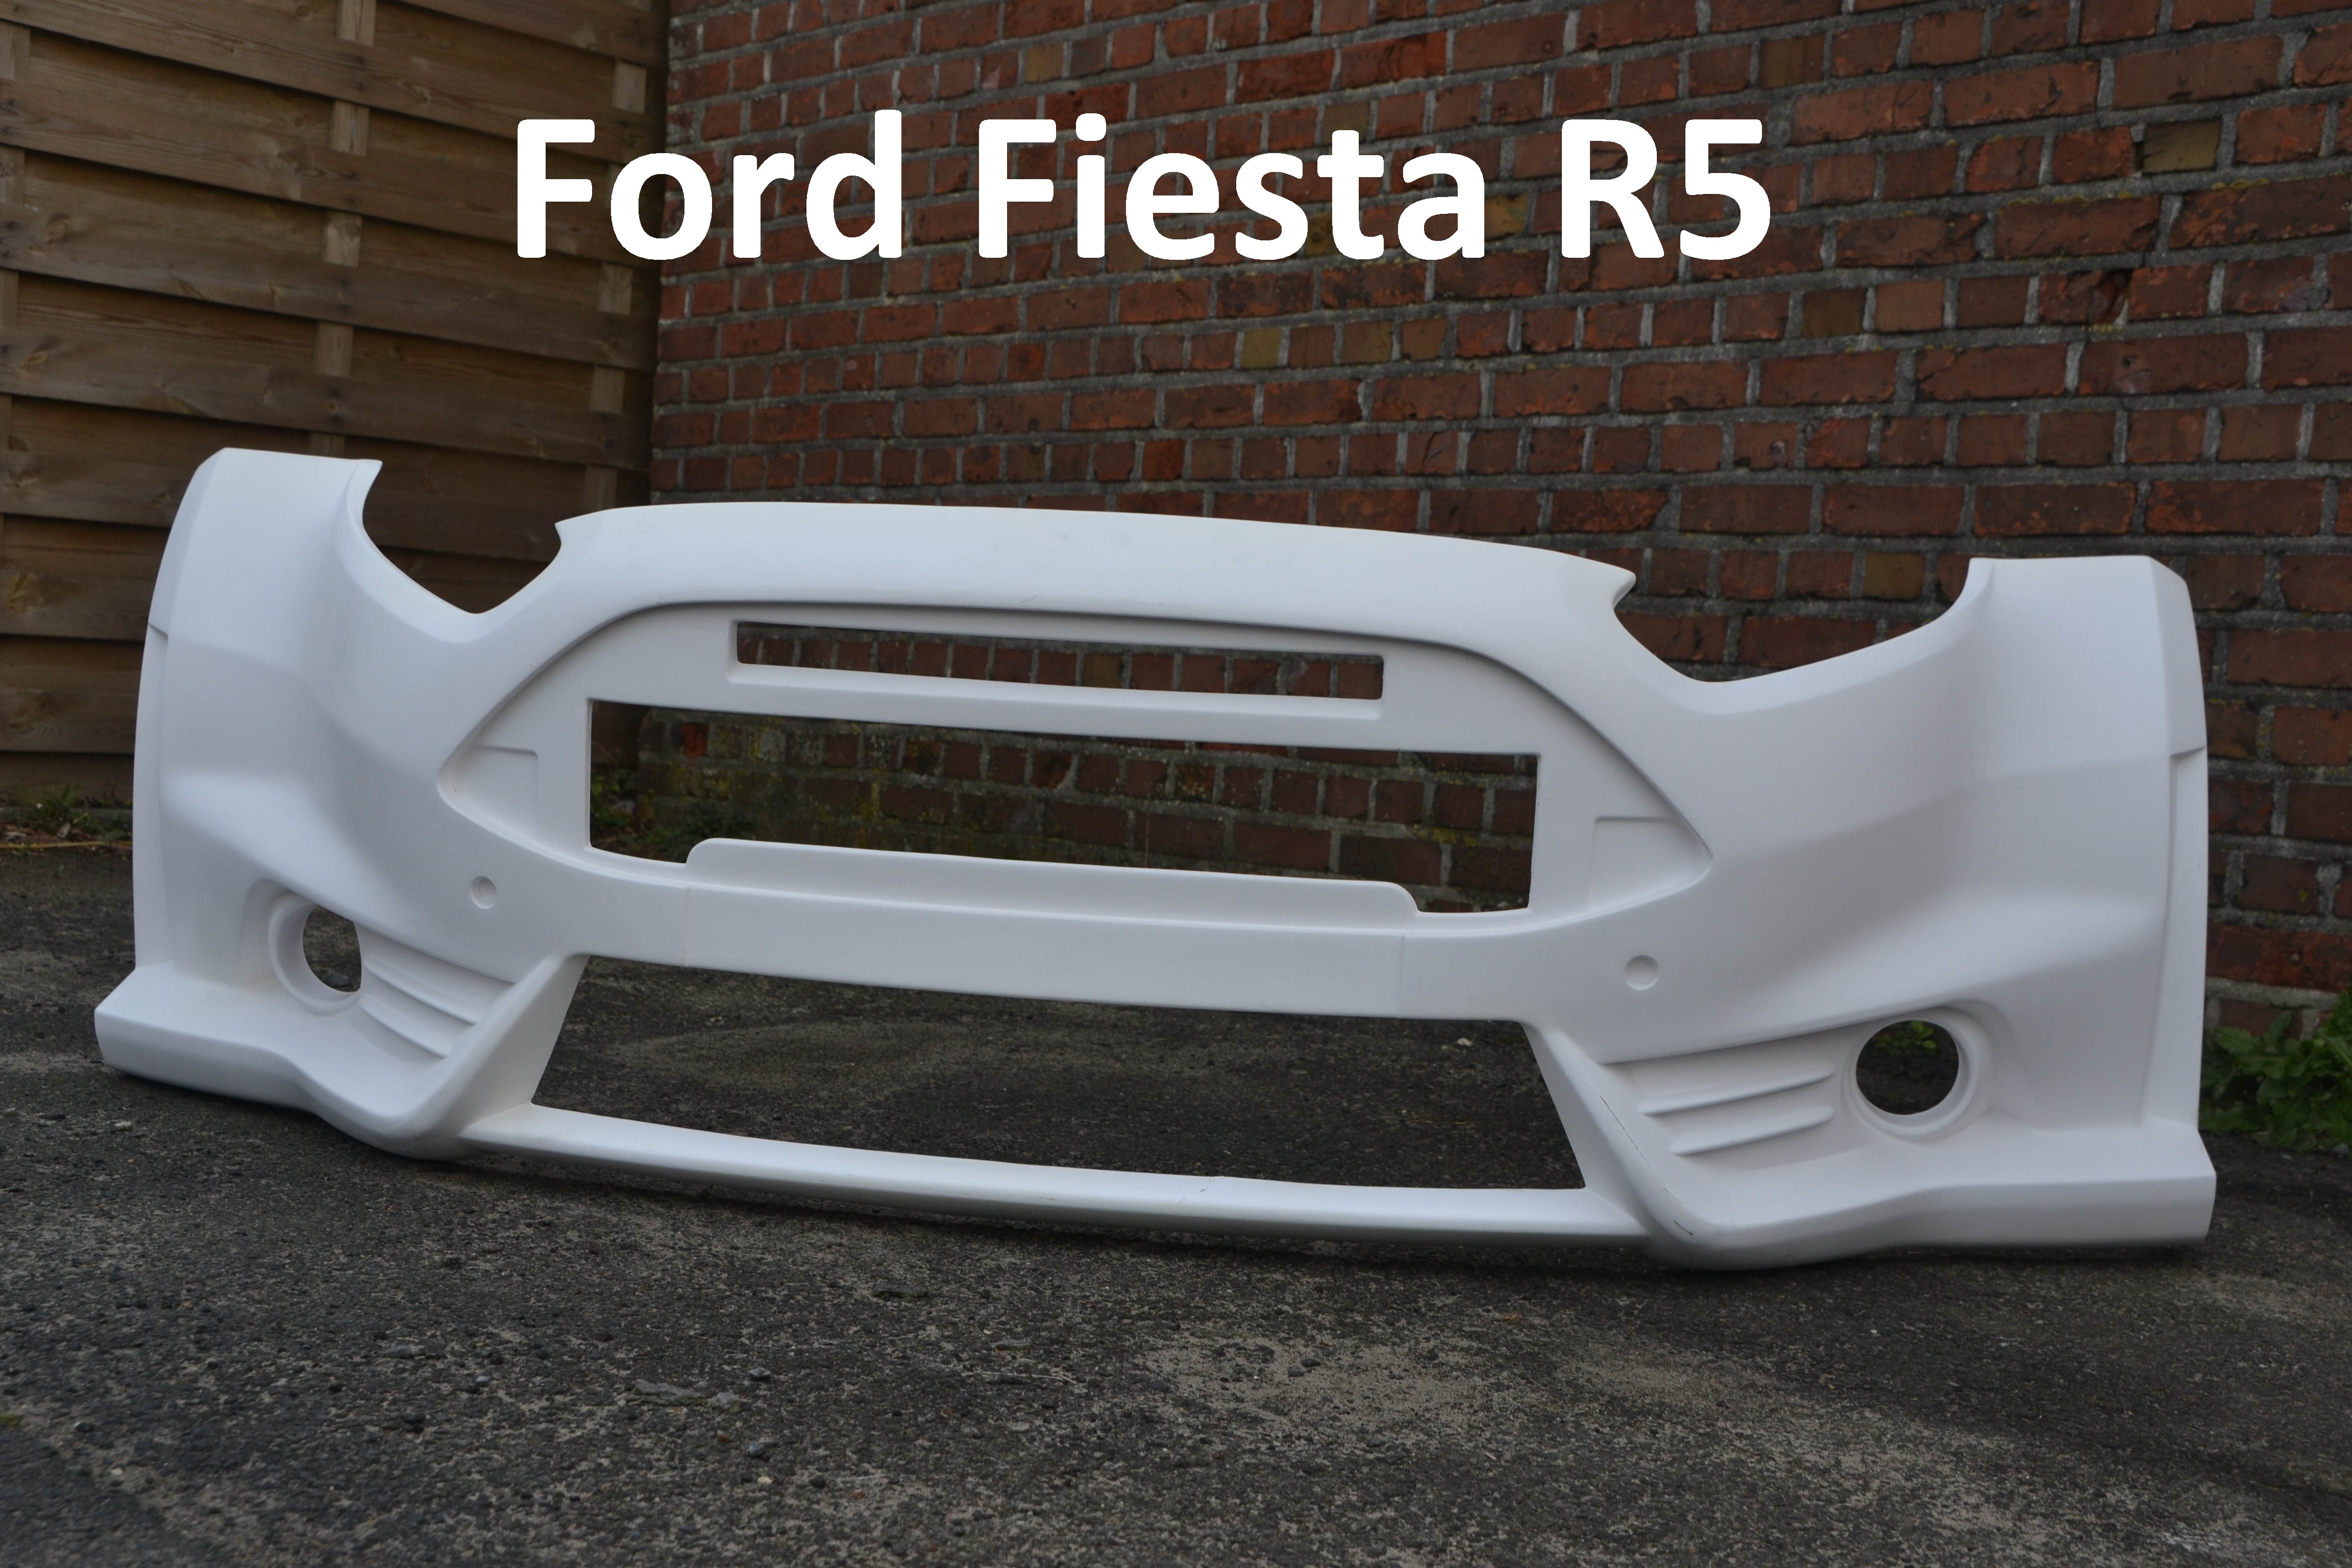 afbeelding van fiesta MK7 bodykit, MK7 R5 kit, R5 bodykit,R5 vleugels, R5 achterbumper, R5 bumper, R5 voorbumper, fiesta R5 bumper, fiesta R5 rallykit, fiesta widebody, ford wide body kit